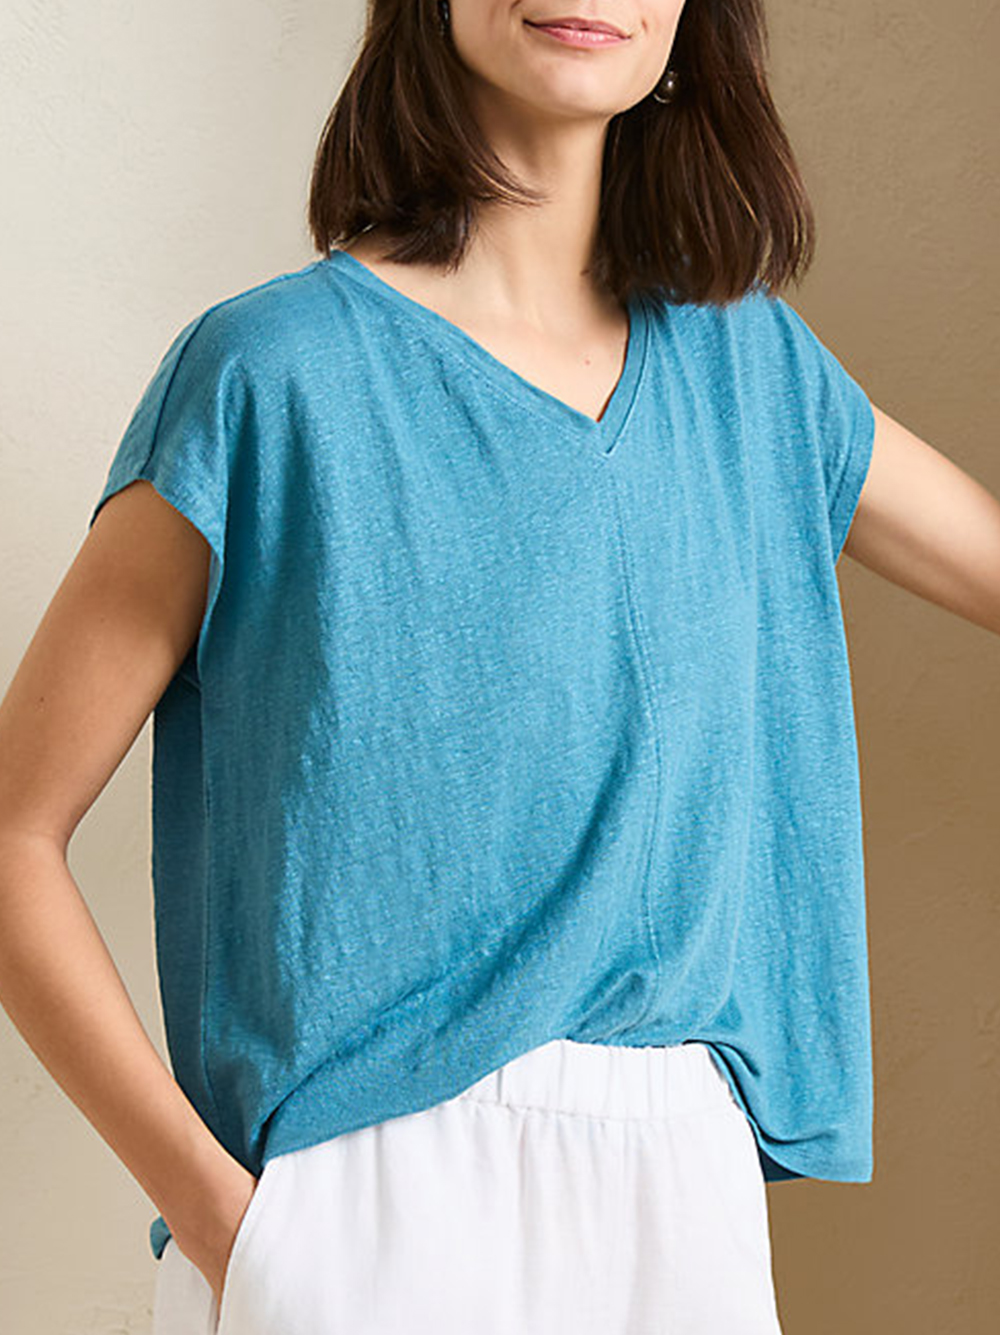 COZINEN Women's Solid Color V-Neck Short Sleeve Top